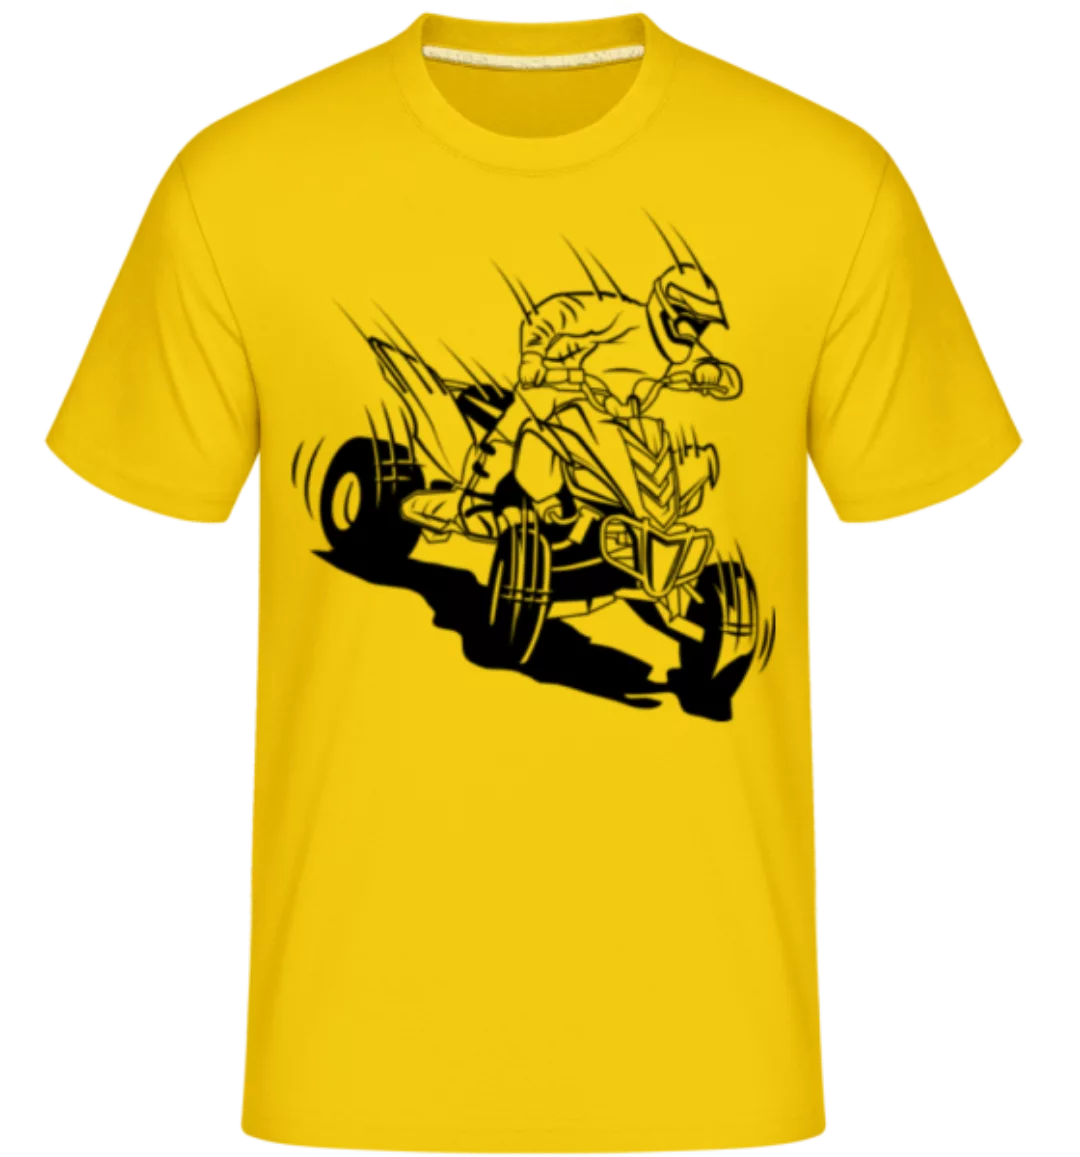 Quad Fahrer Comic · Shirtinator Männer T-Shirt günstig online kaufen